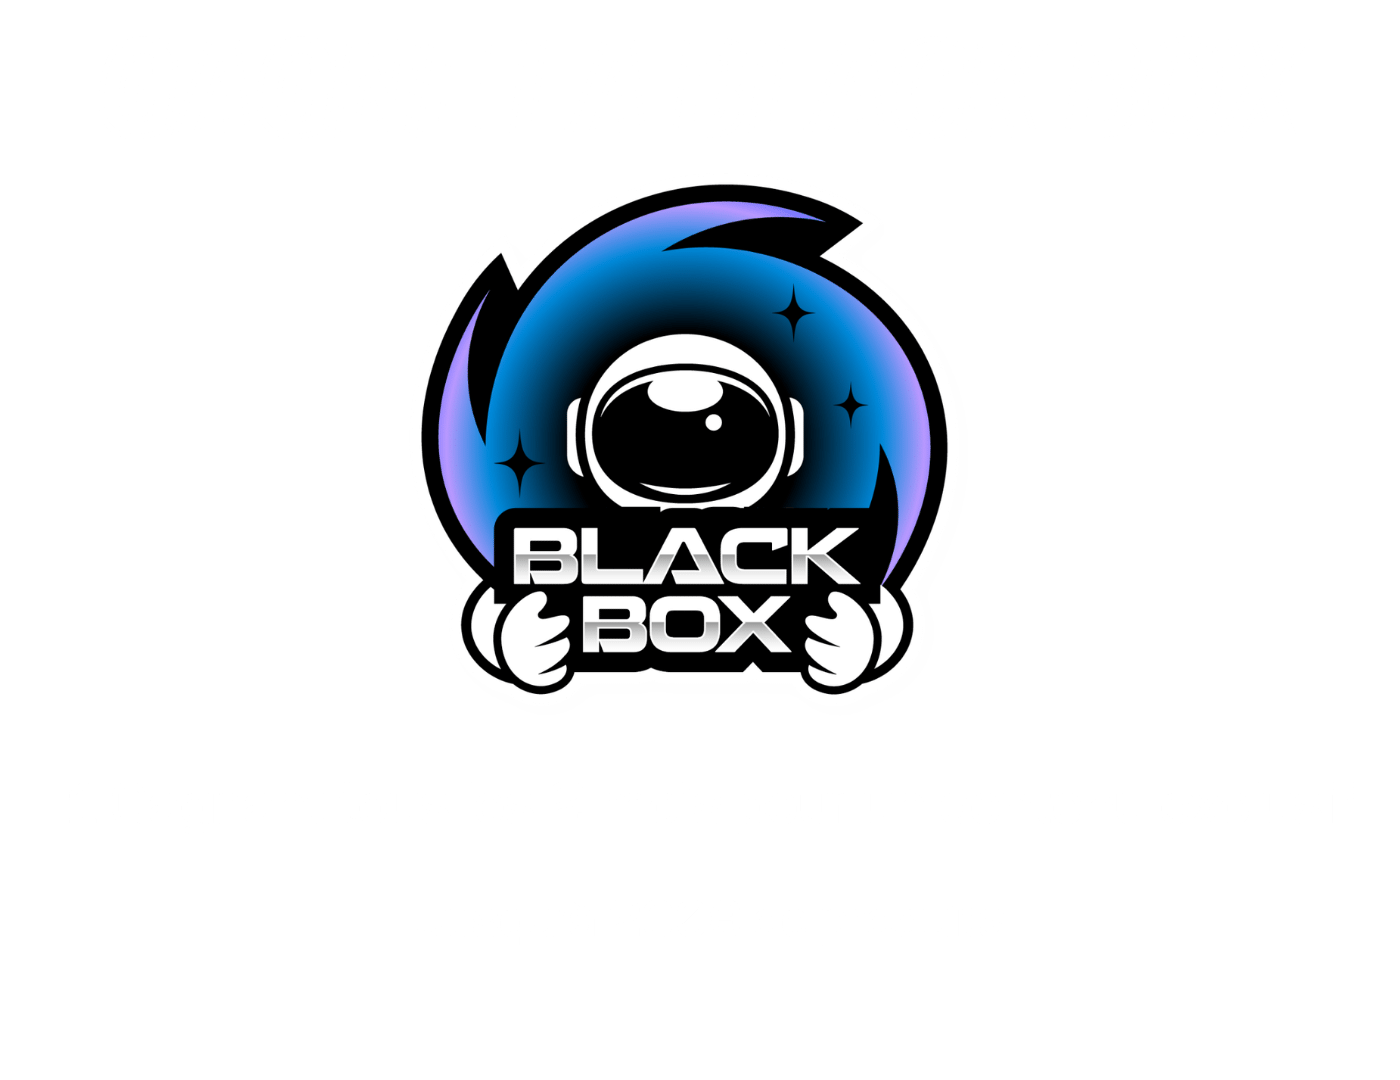 879-copie-de-gagne-ta-black-box-1400-x-1080-px-16995207998009.png